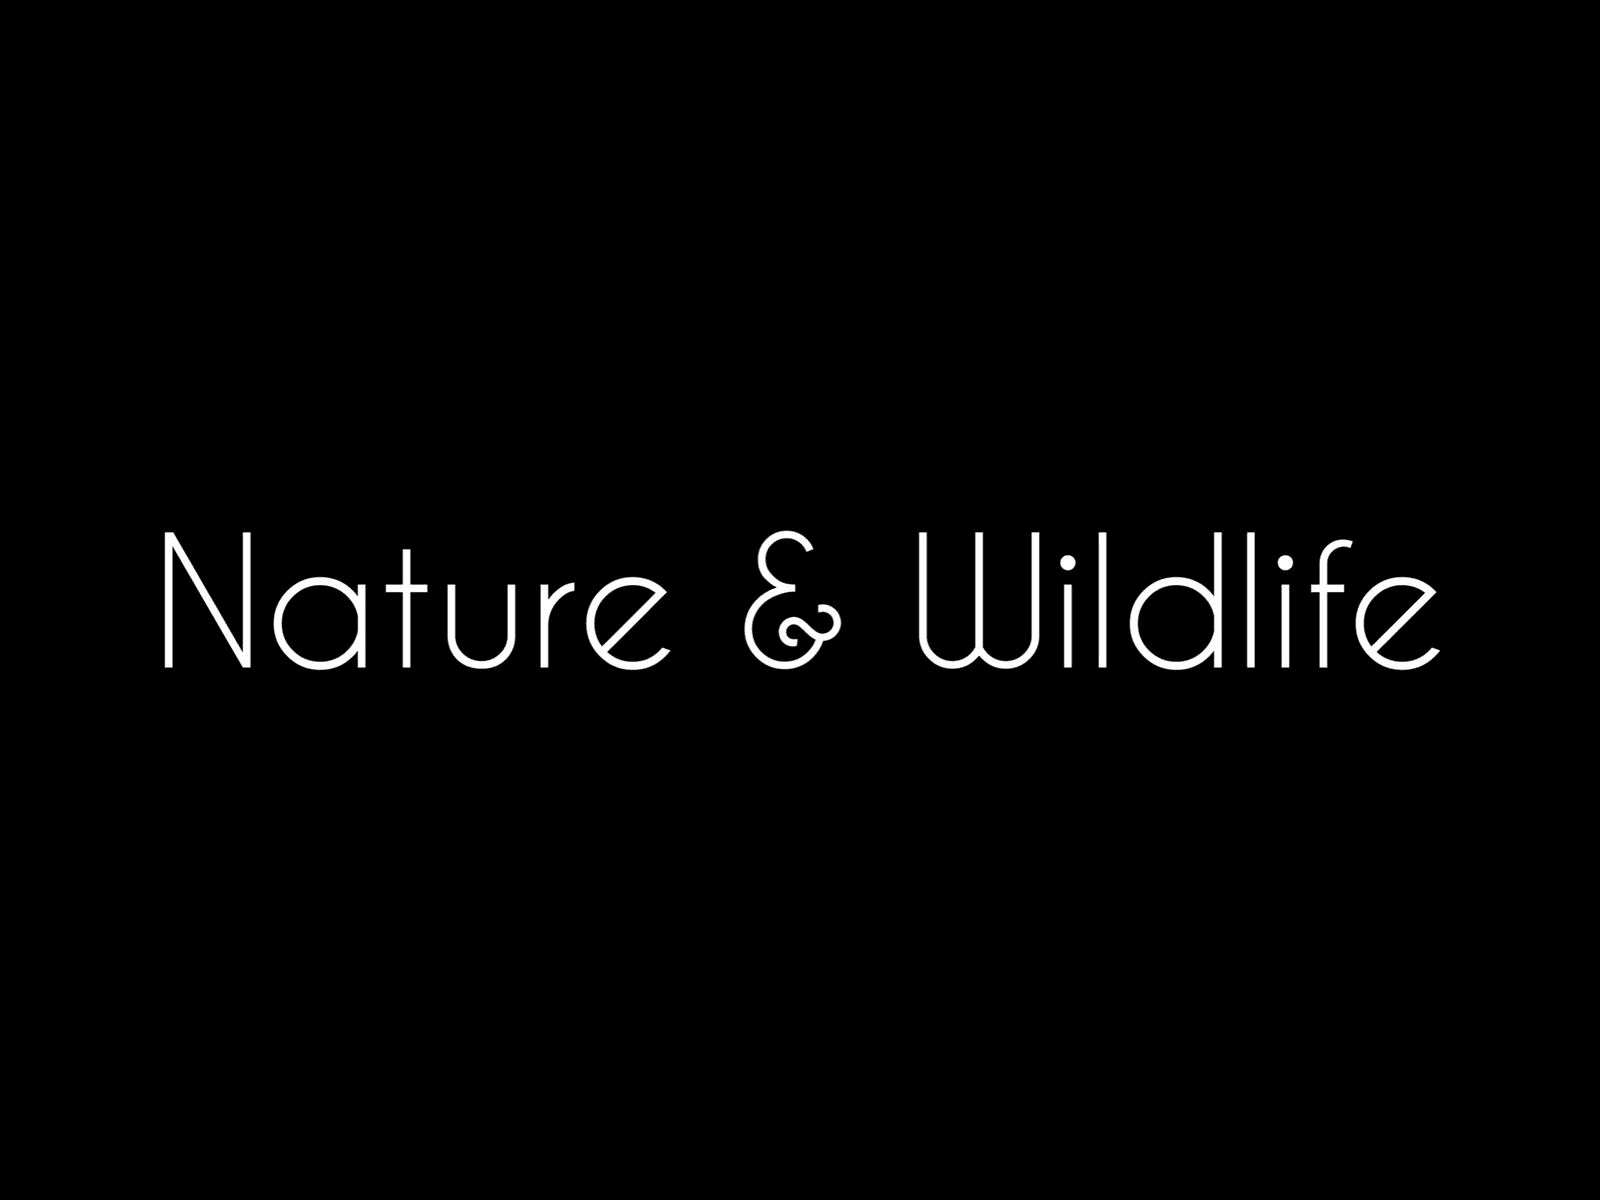 Nature - Wildlife